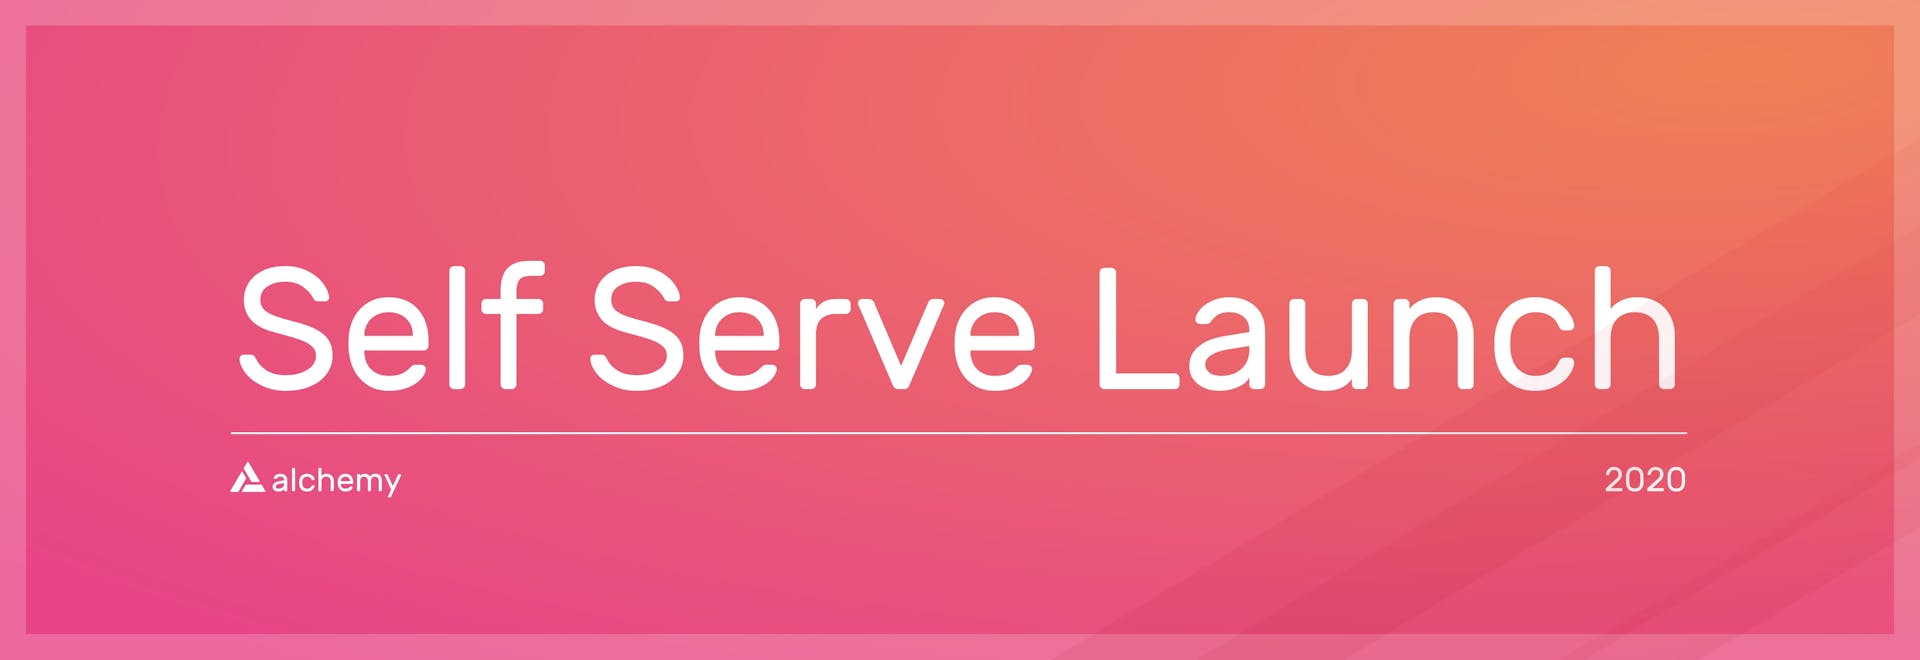 Self serve launch